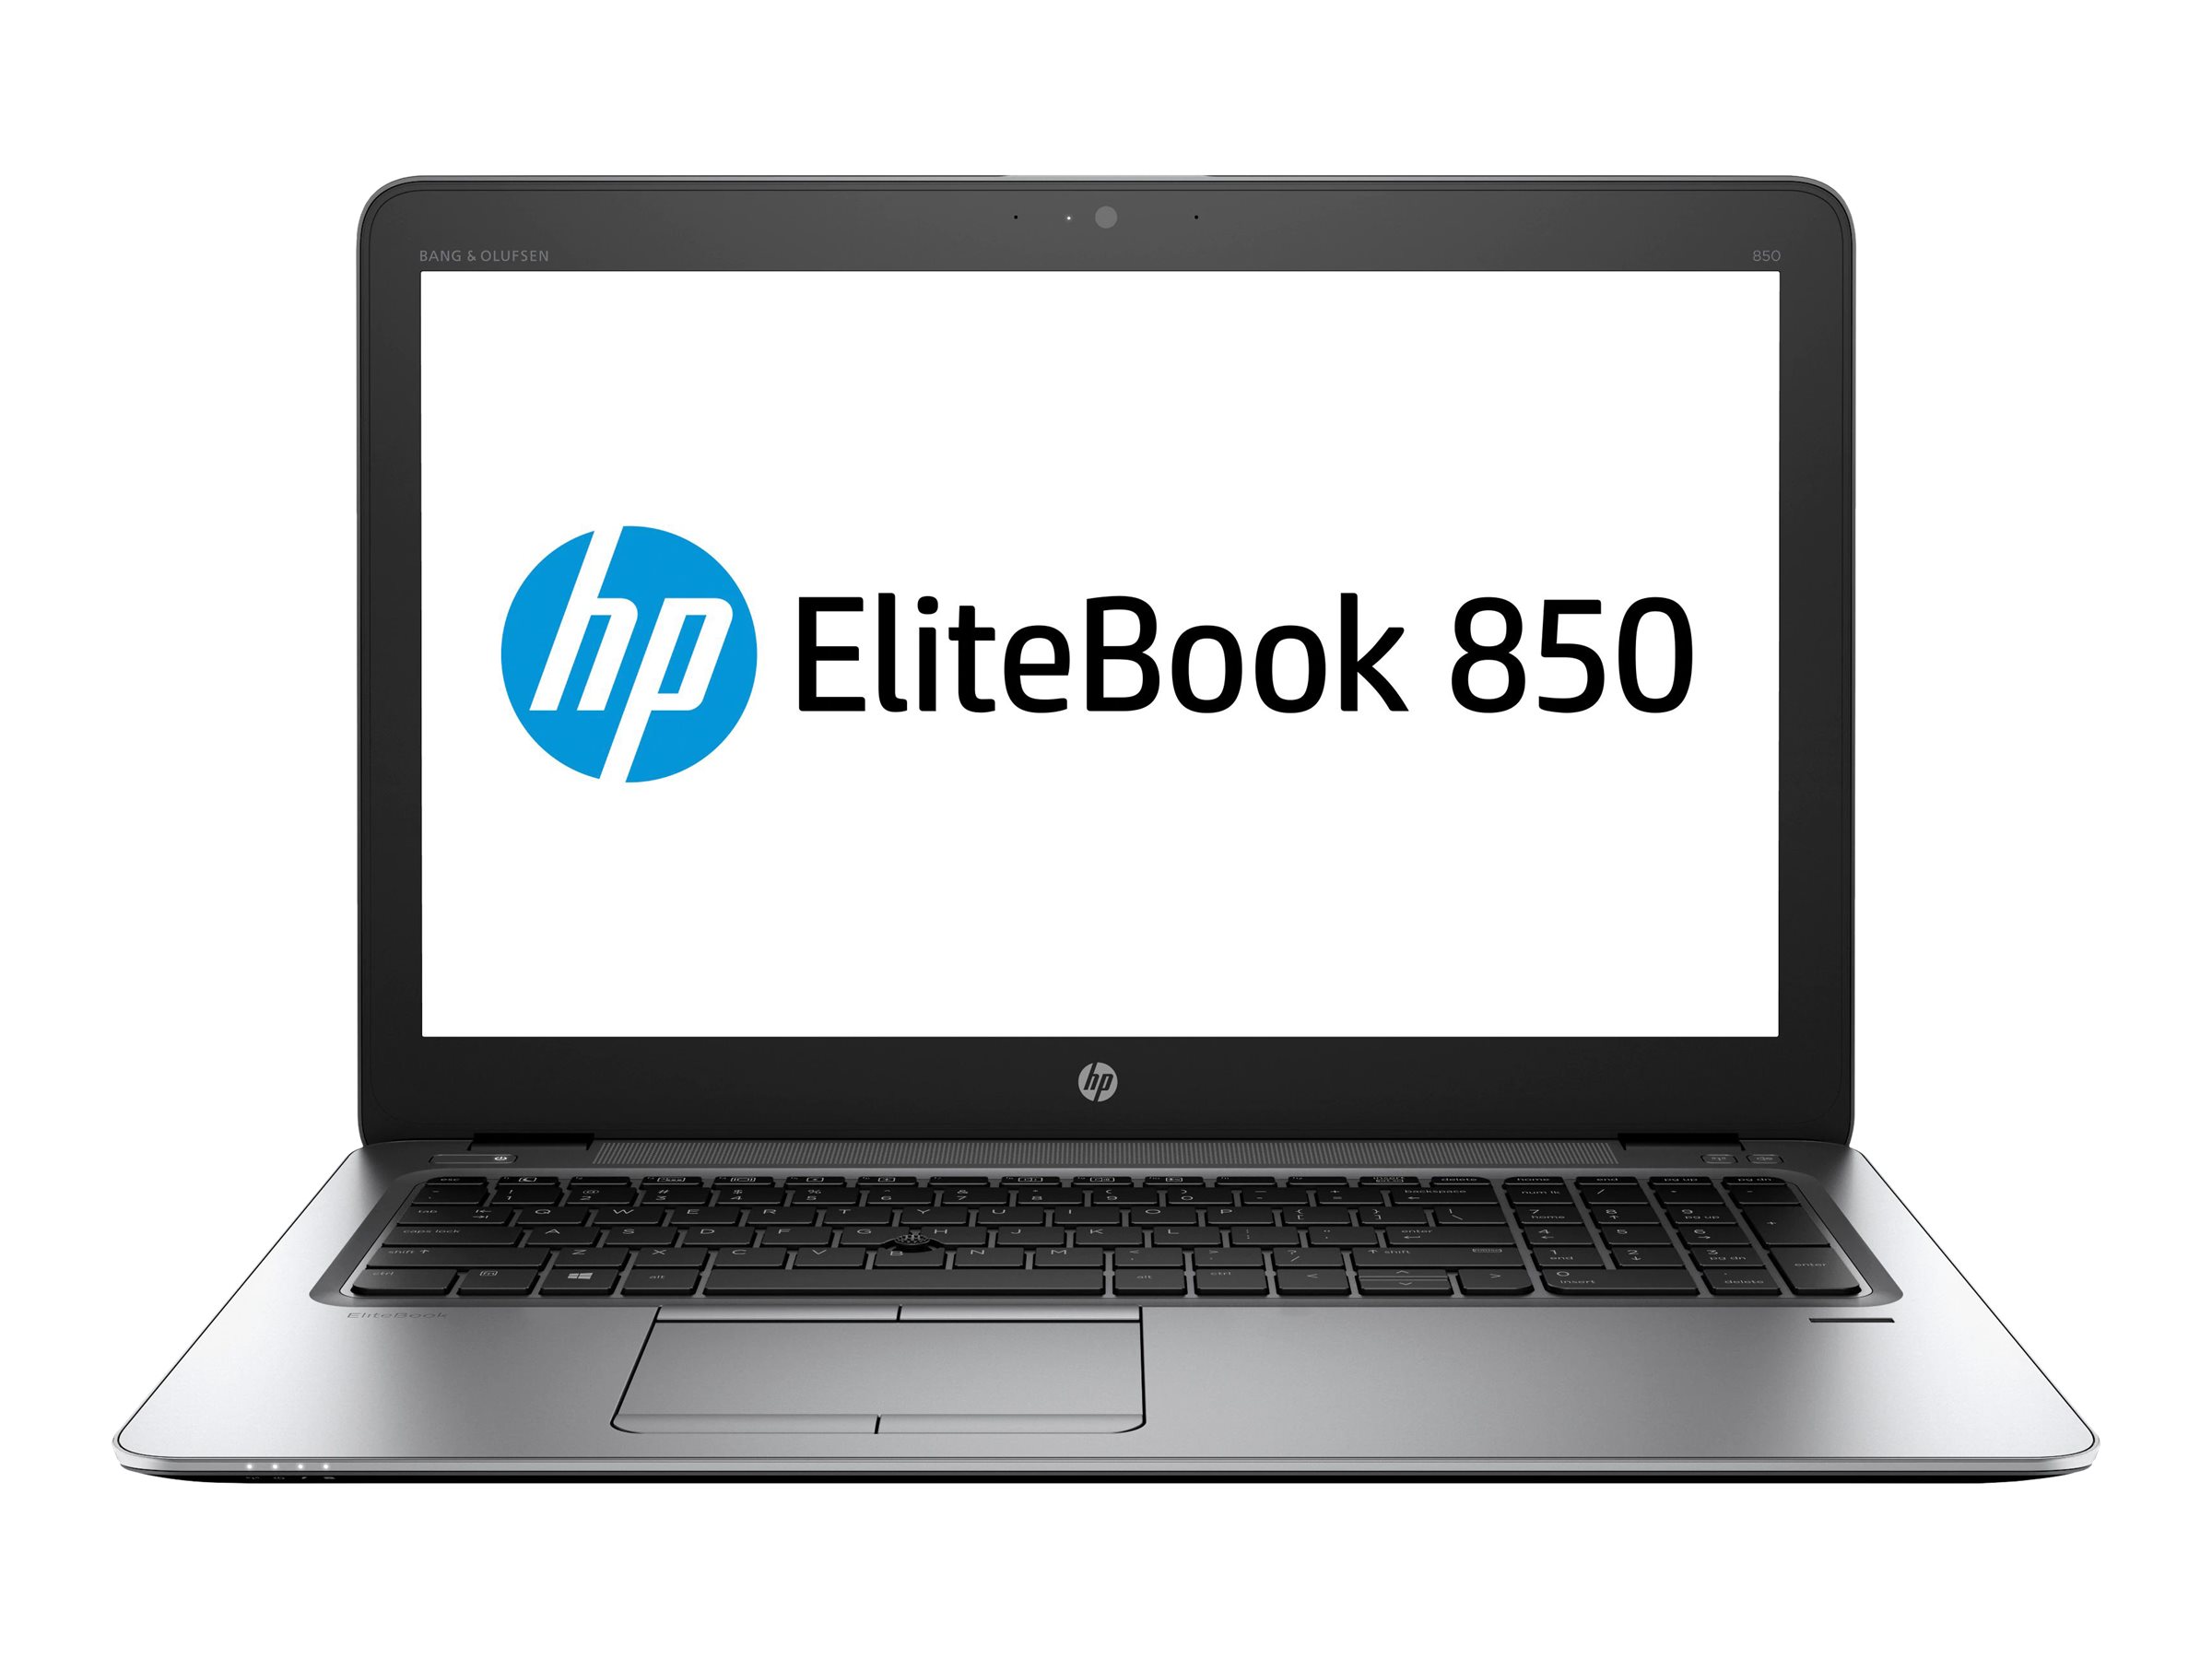 HP EliteBook 850 G3 Notebook